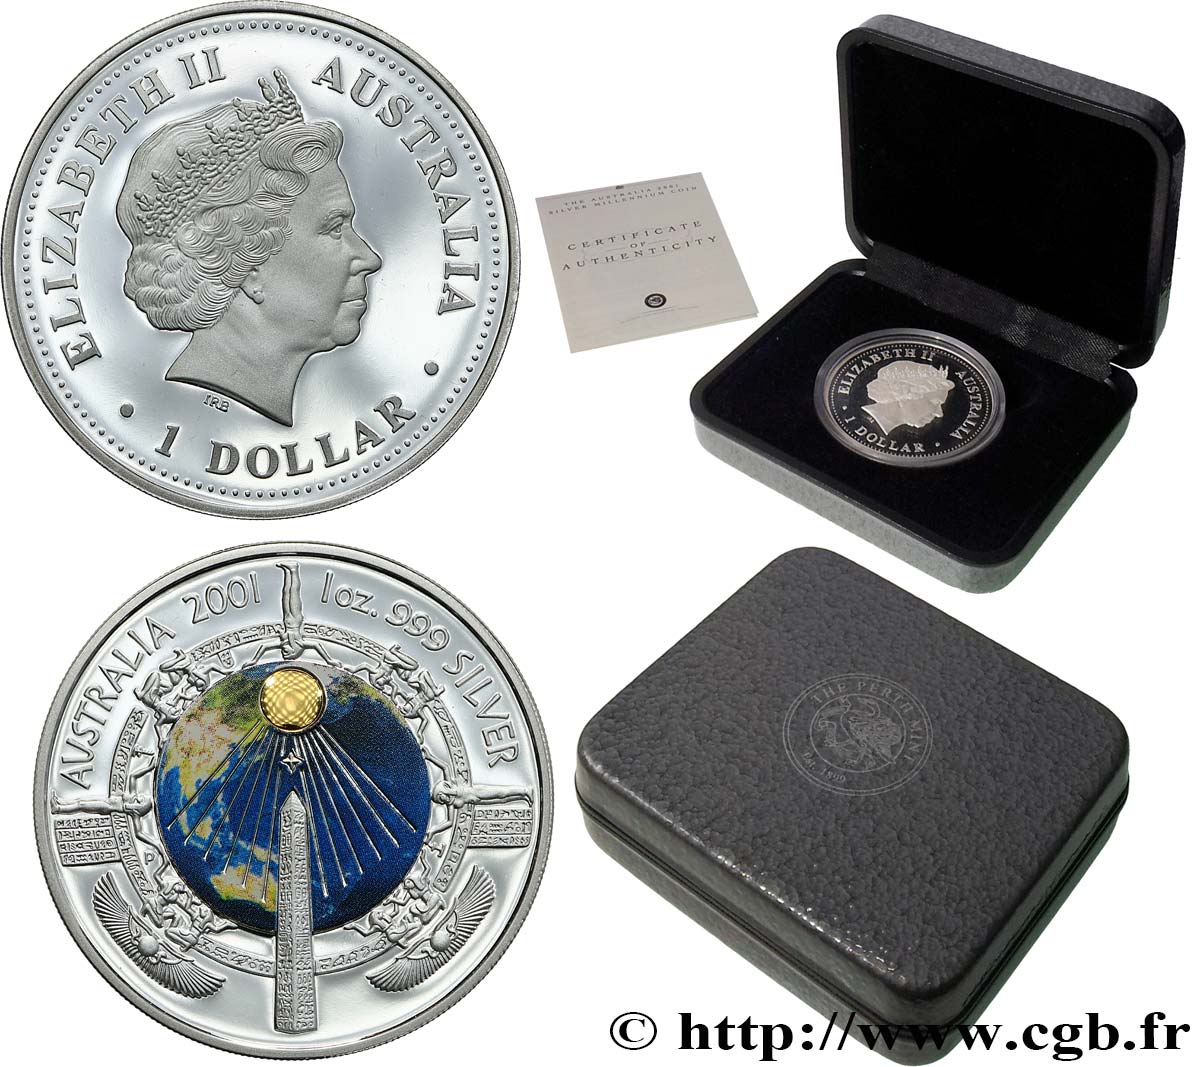 AUSTRALIEN 1 Dollar Proof “Millenium coin” 2001  Polierte Platte 